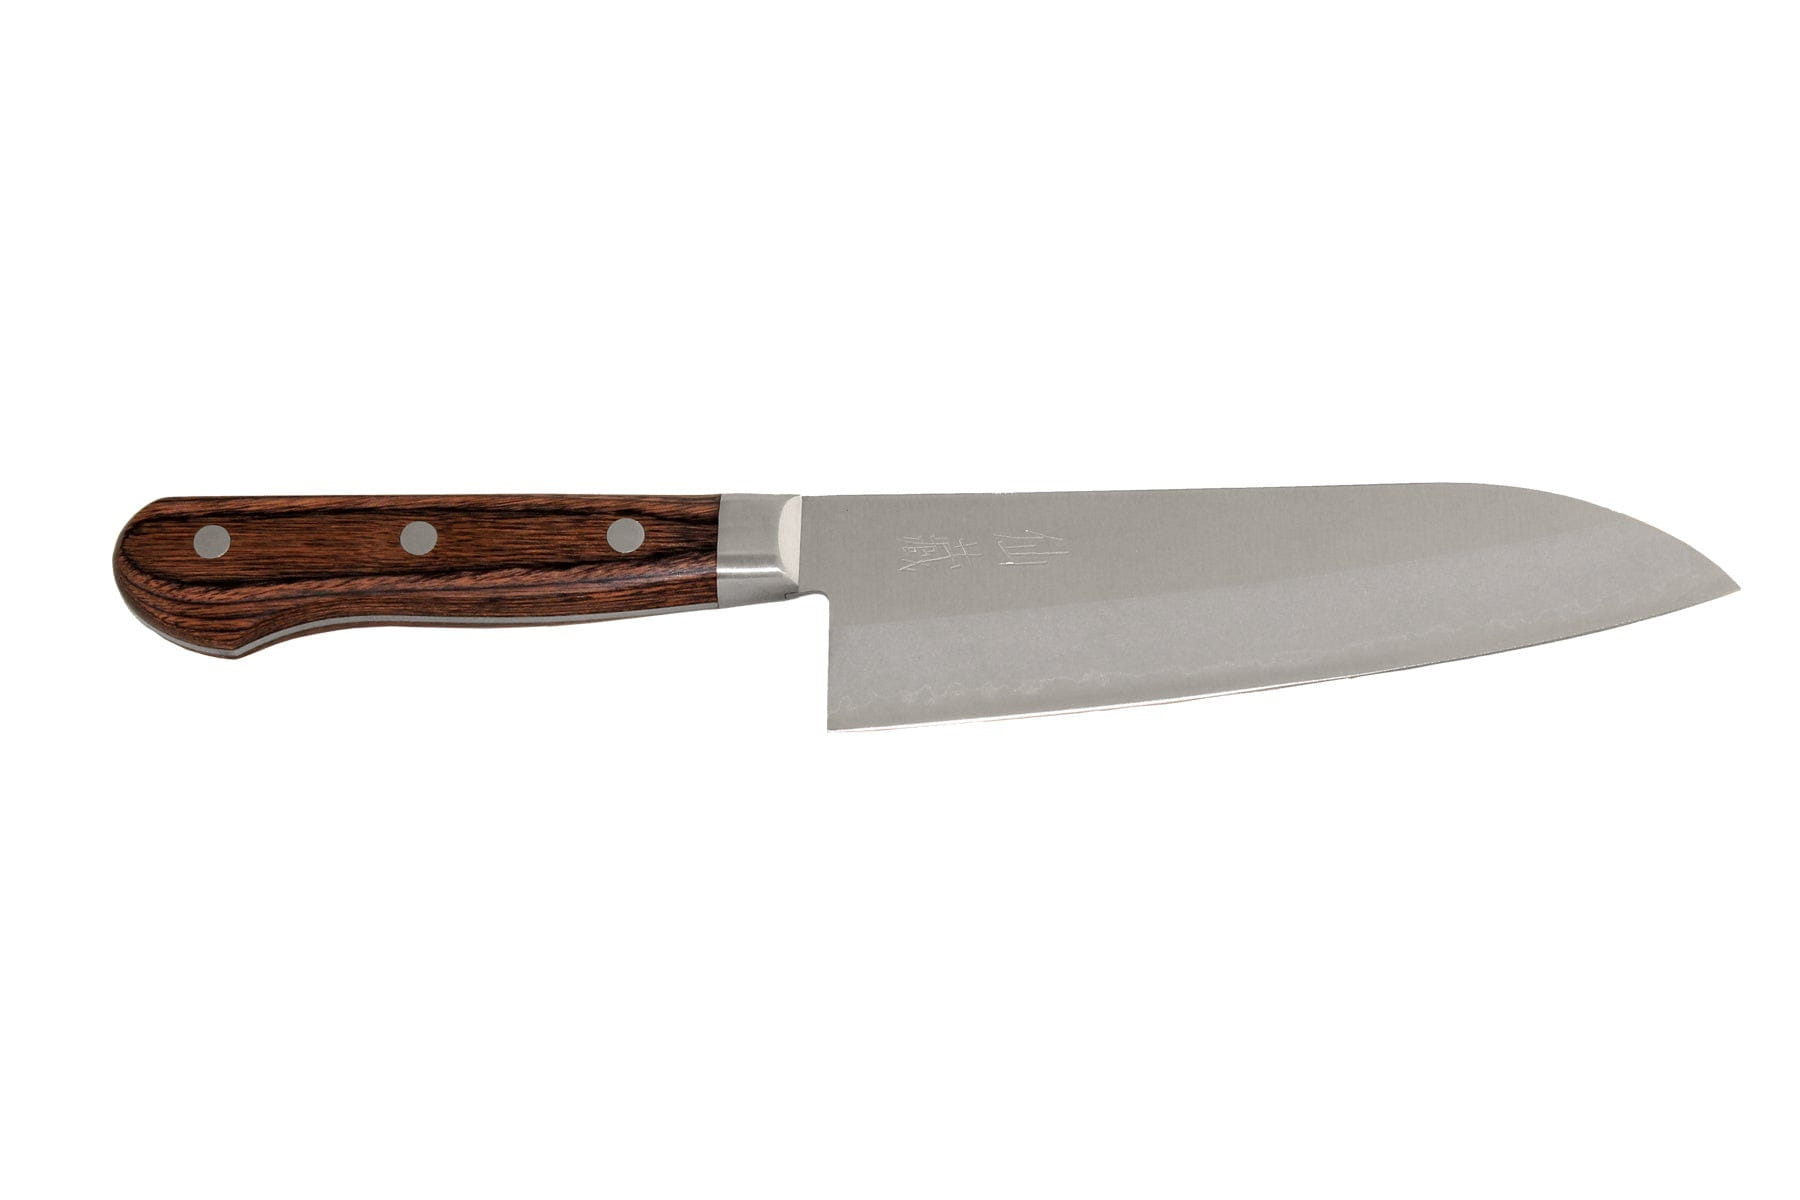 Senzo Clad As 01 Santoko Knife, 16.5 Cm